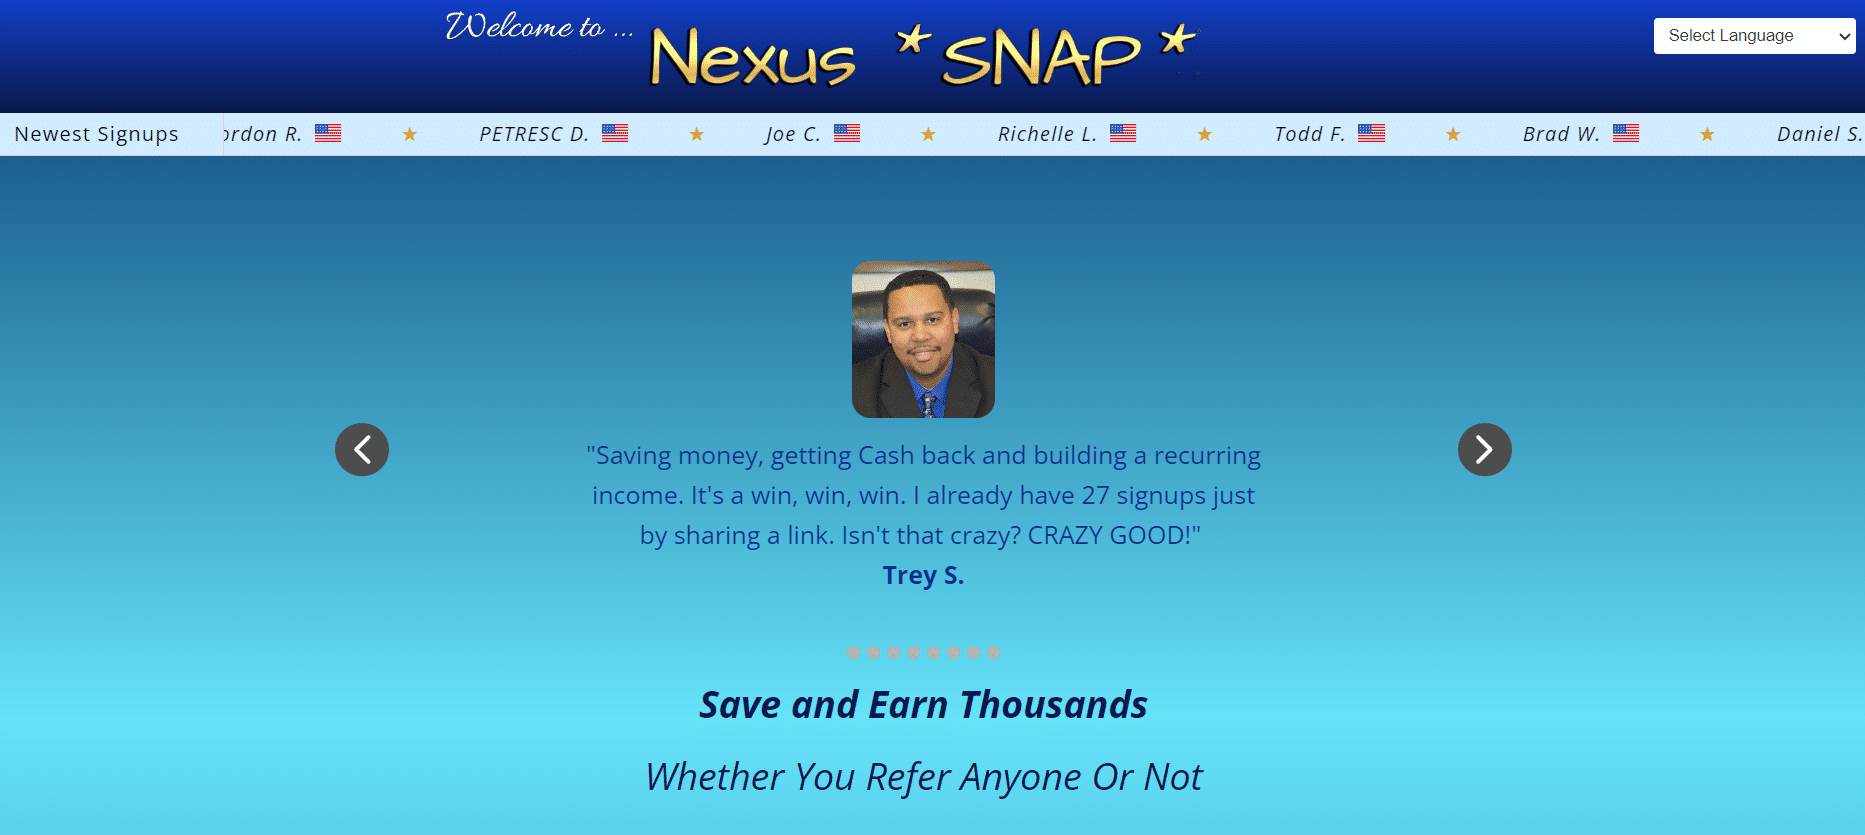 nexus snap testimonials